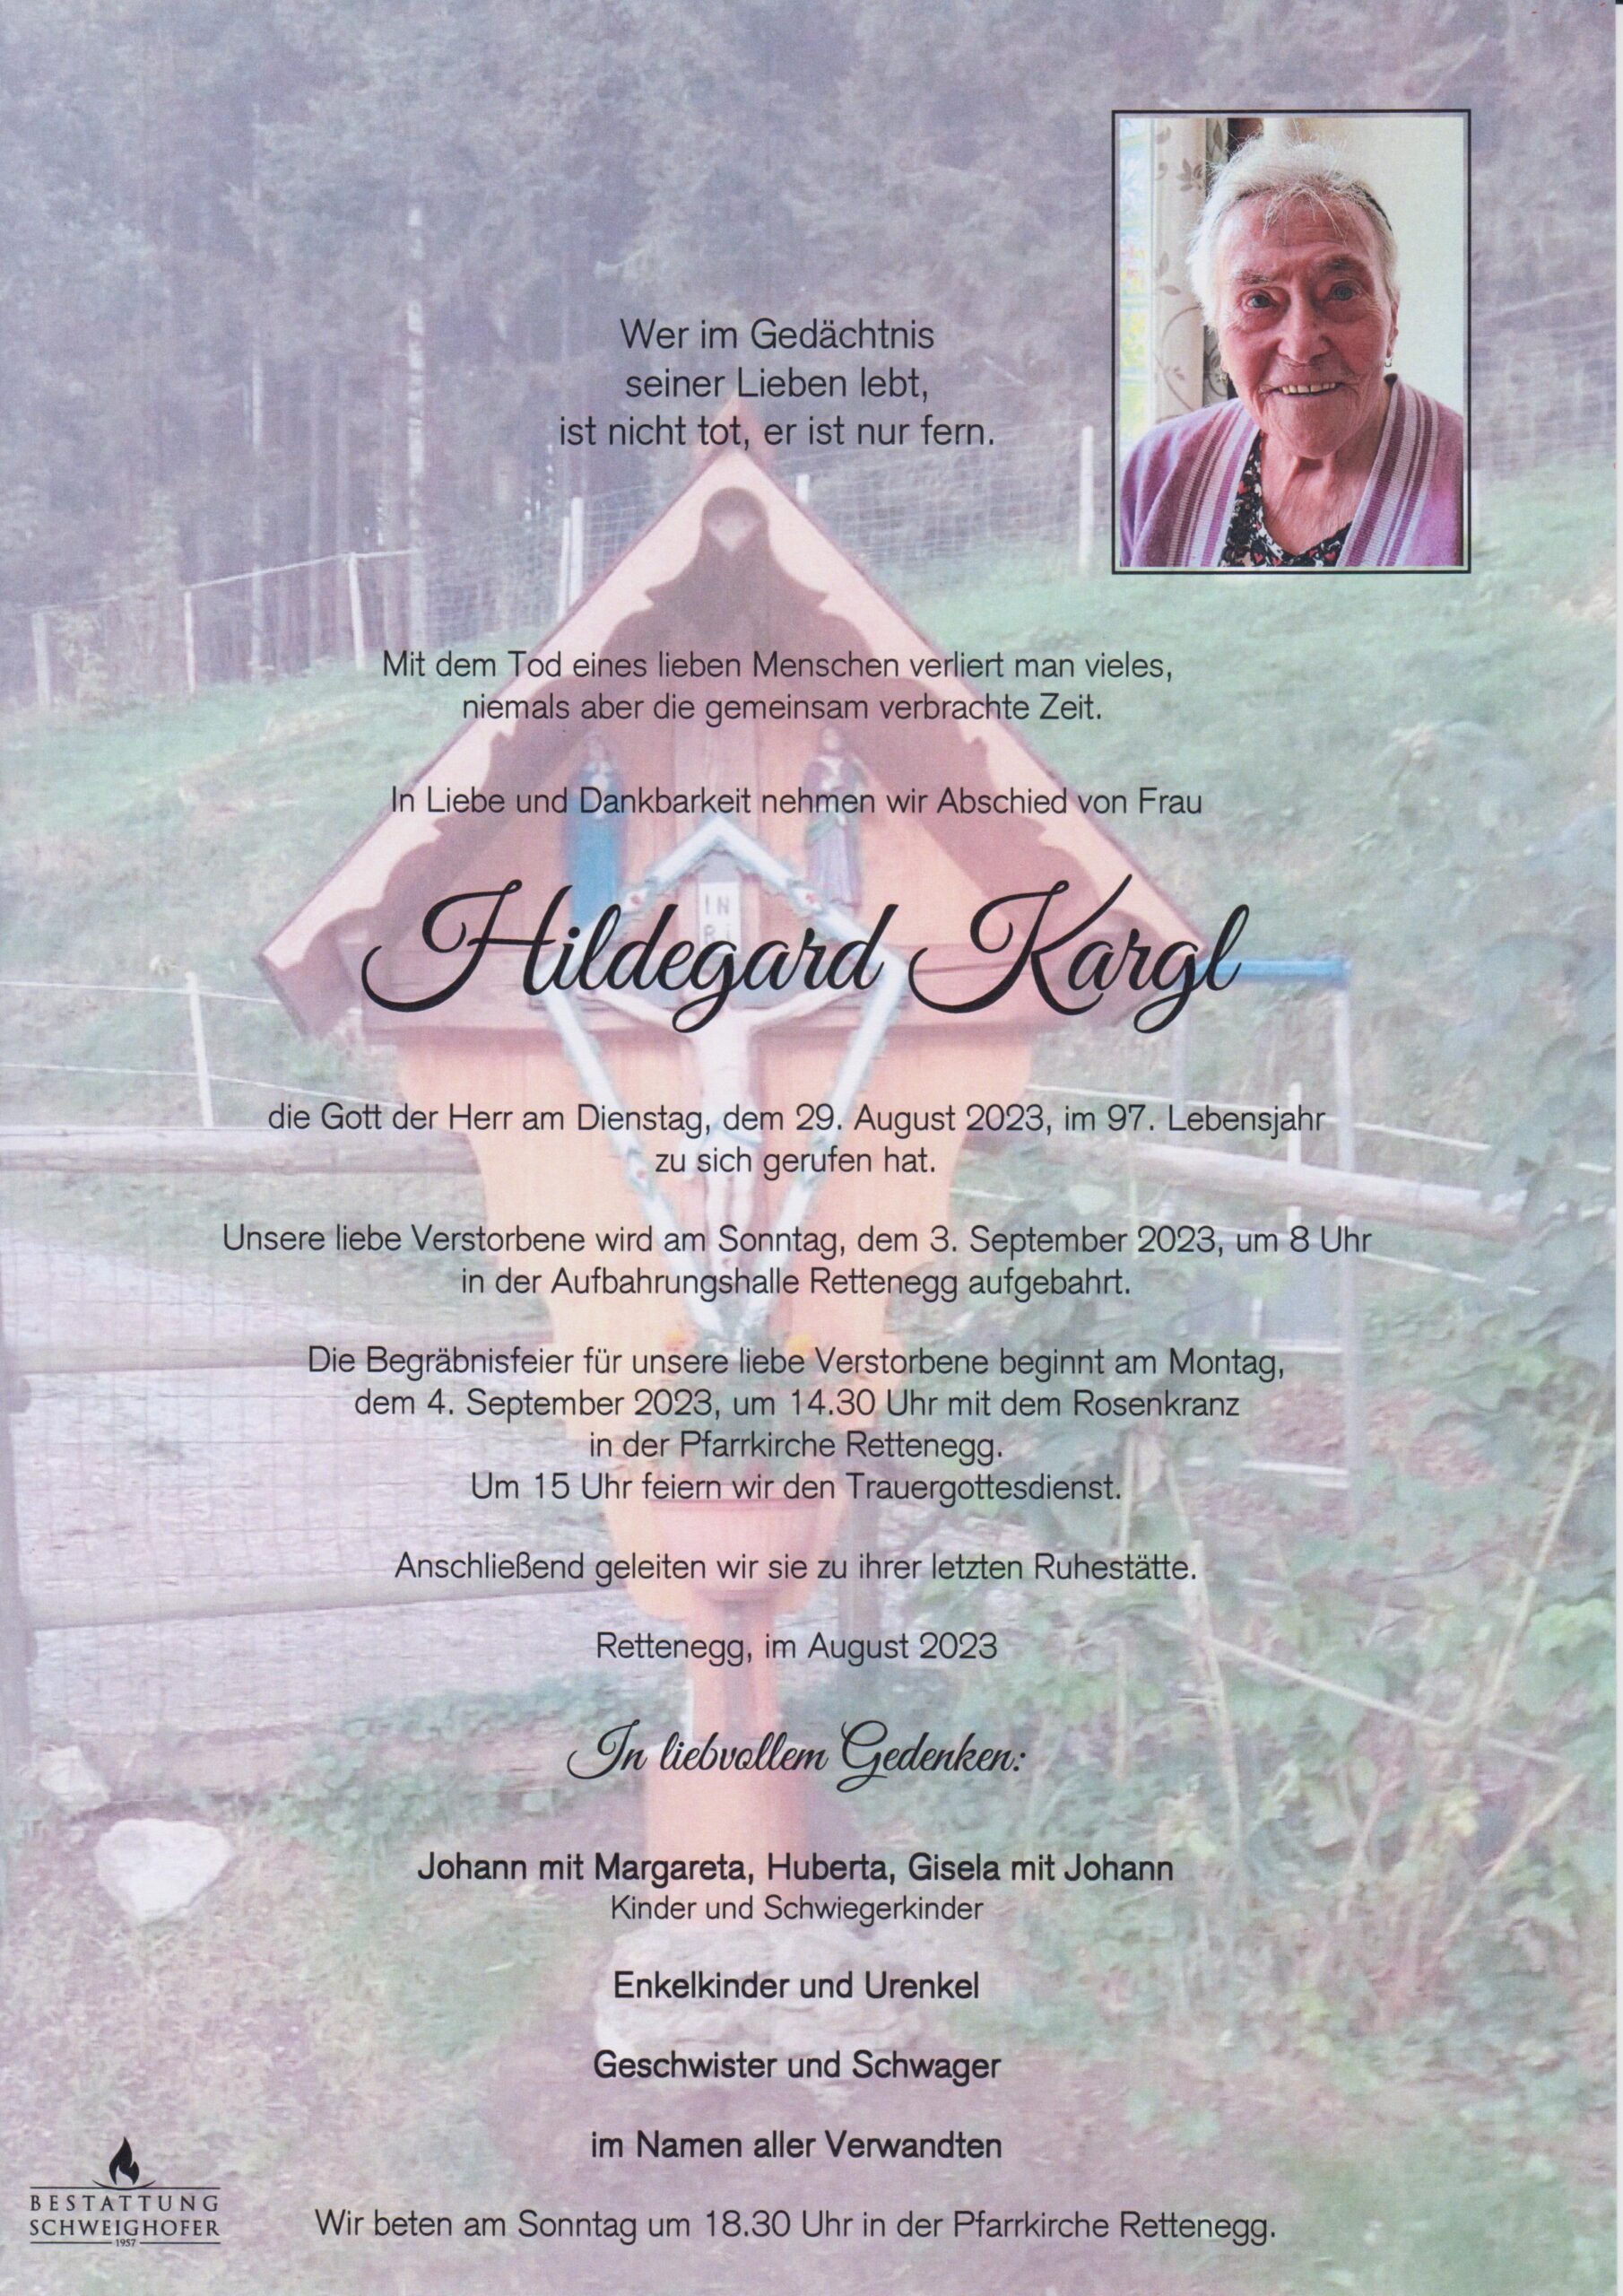 Hildegard Kargl